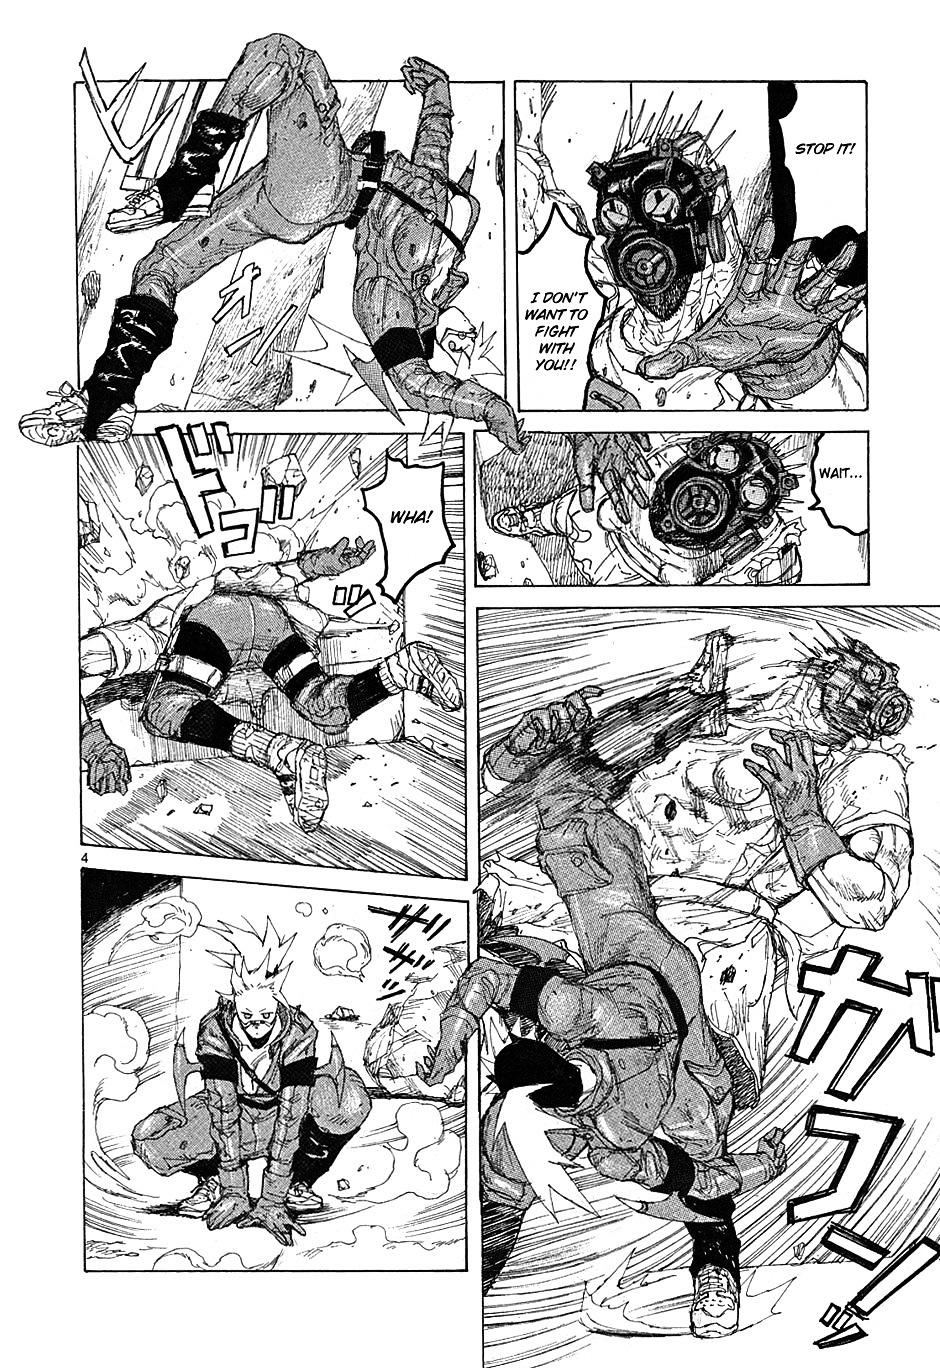 Dorohedoro Chapter 39 : Battle.. Boy Meets Girl page 4 - Mangakakalot